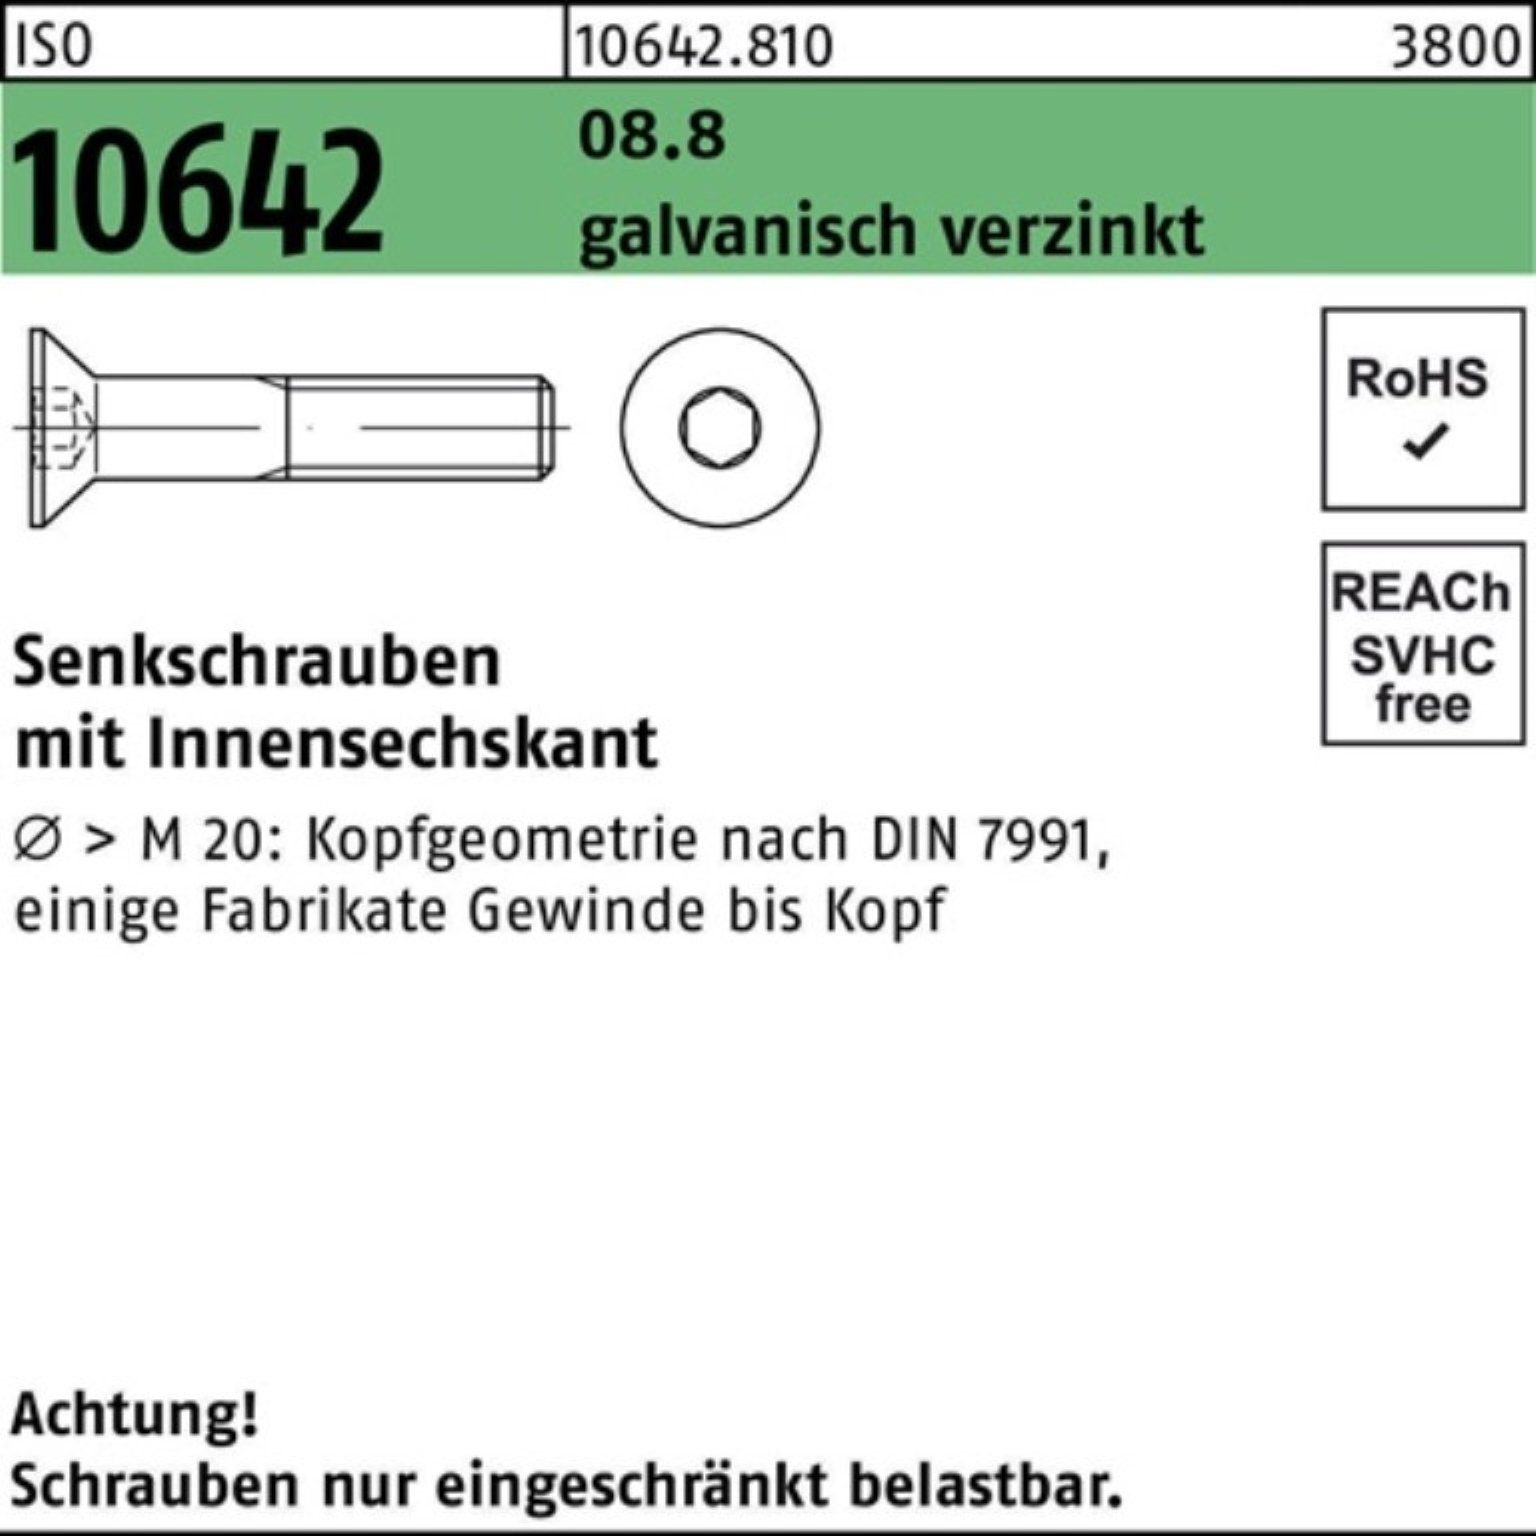 Reyher Senkschraube 500er Pack 45 galv.verz. 8.8 Innen-6kt 10642 ISO 500 Senkschraube M4x